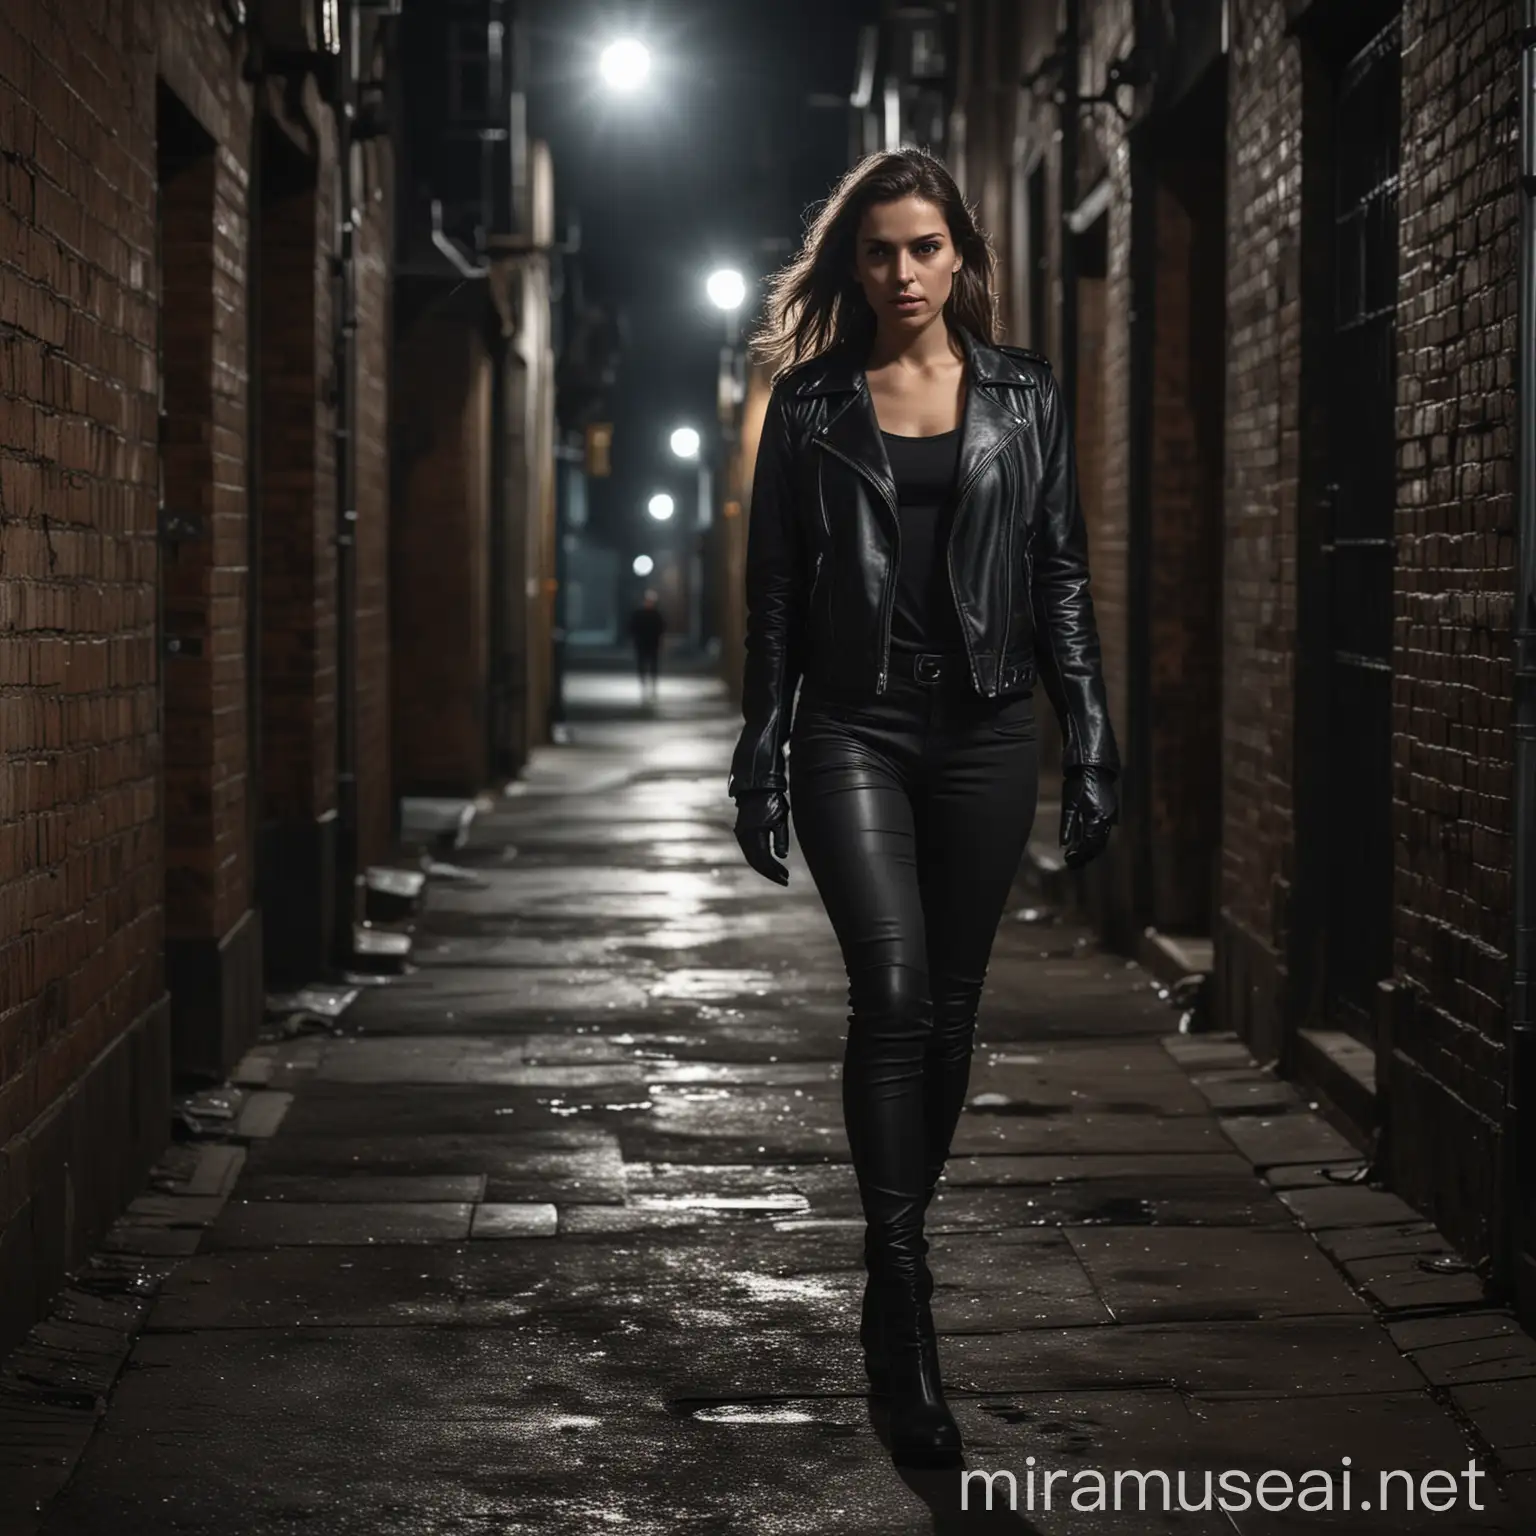 Young Woman in Dramatic Night Walk Through Dark Alley